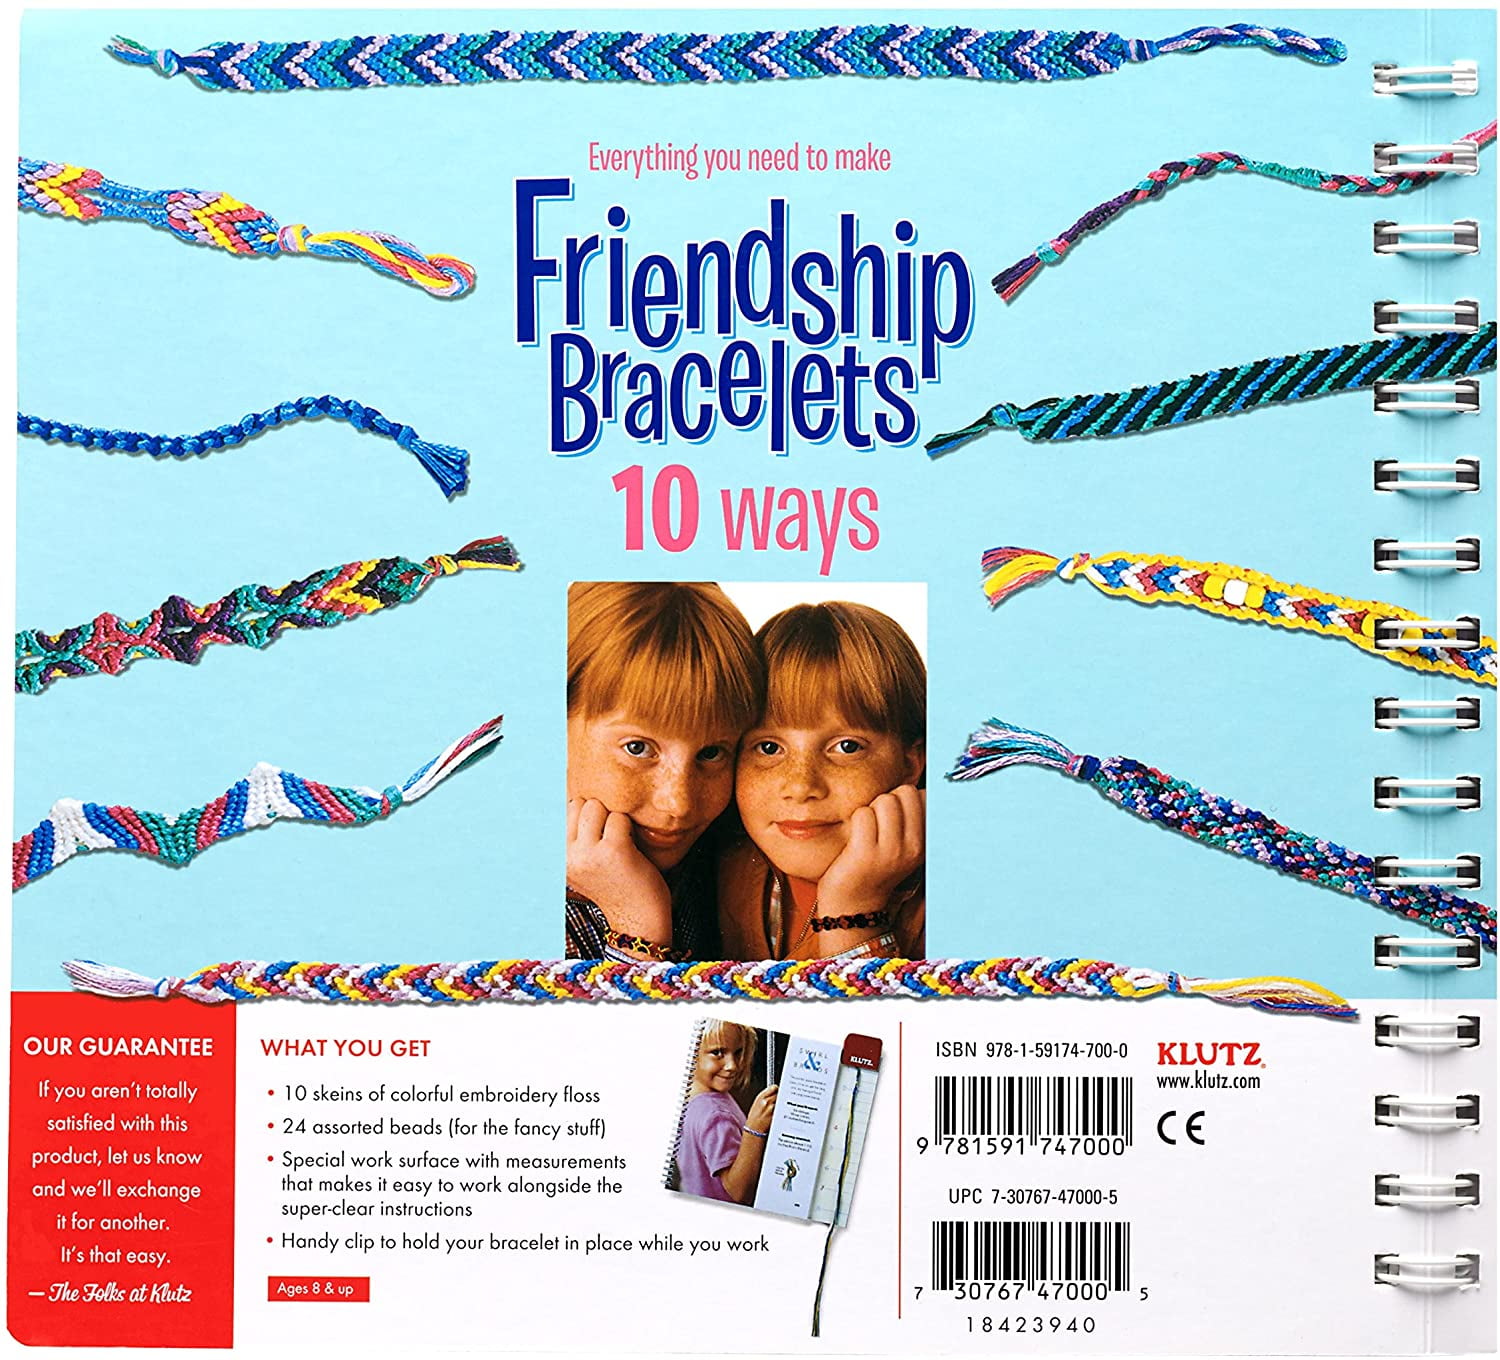 Share® Friendship Bracelets by Trust Your Journey®